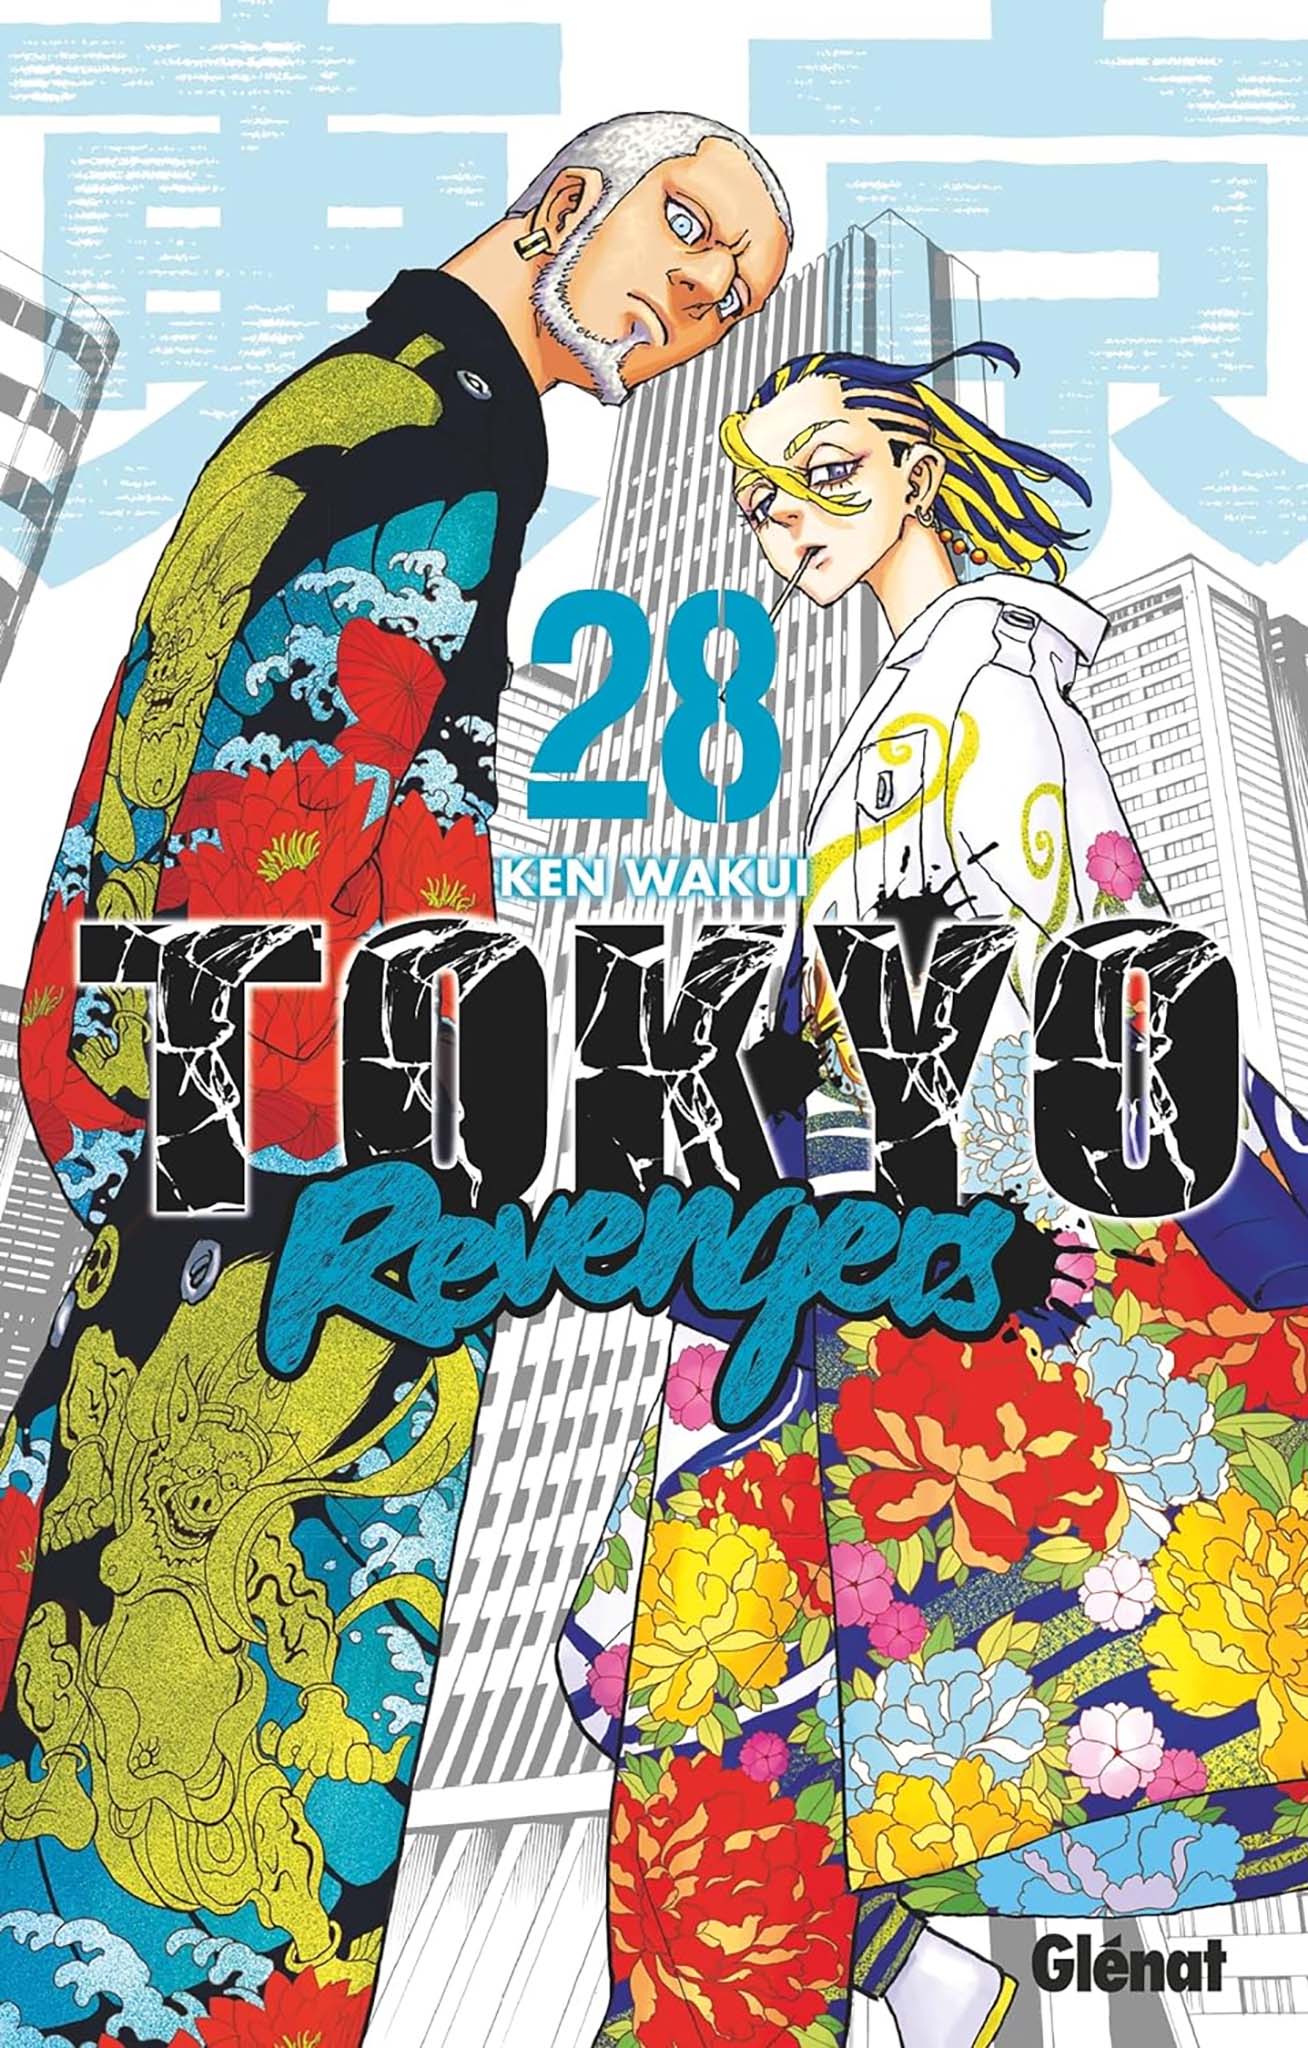 Tome 28 du manga Tokyo Revengers.